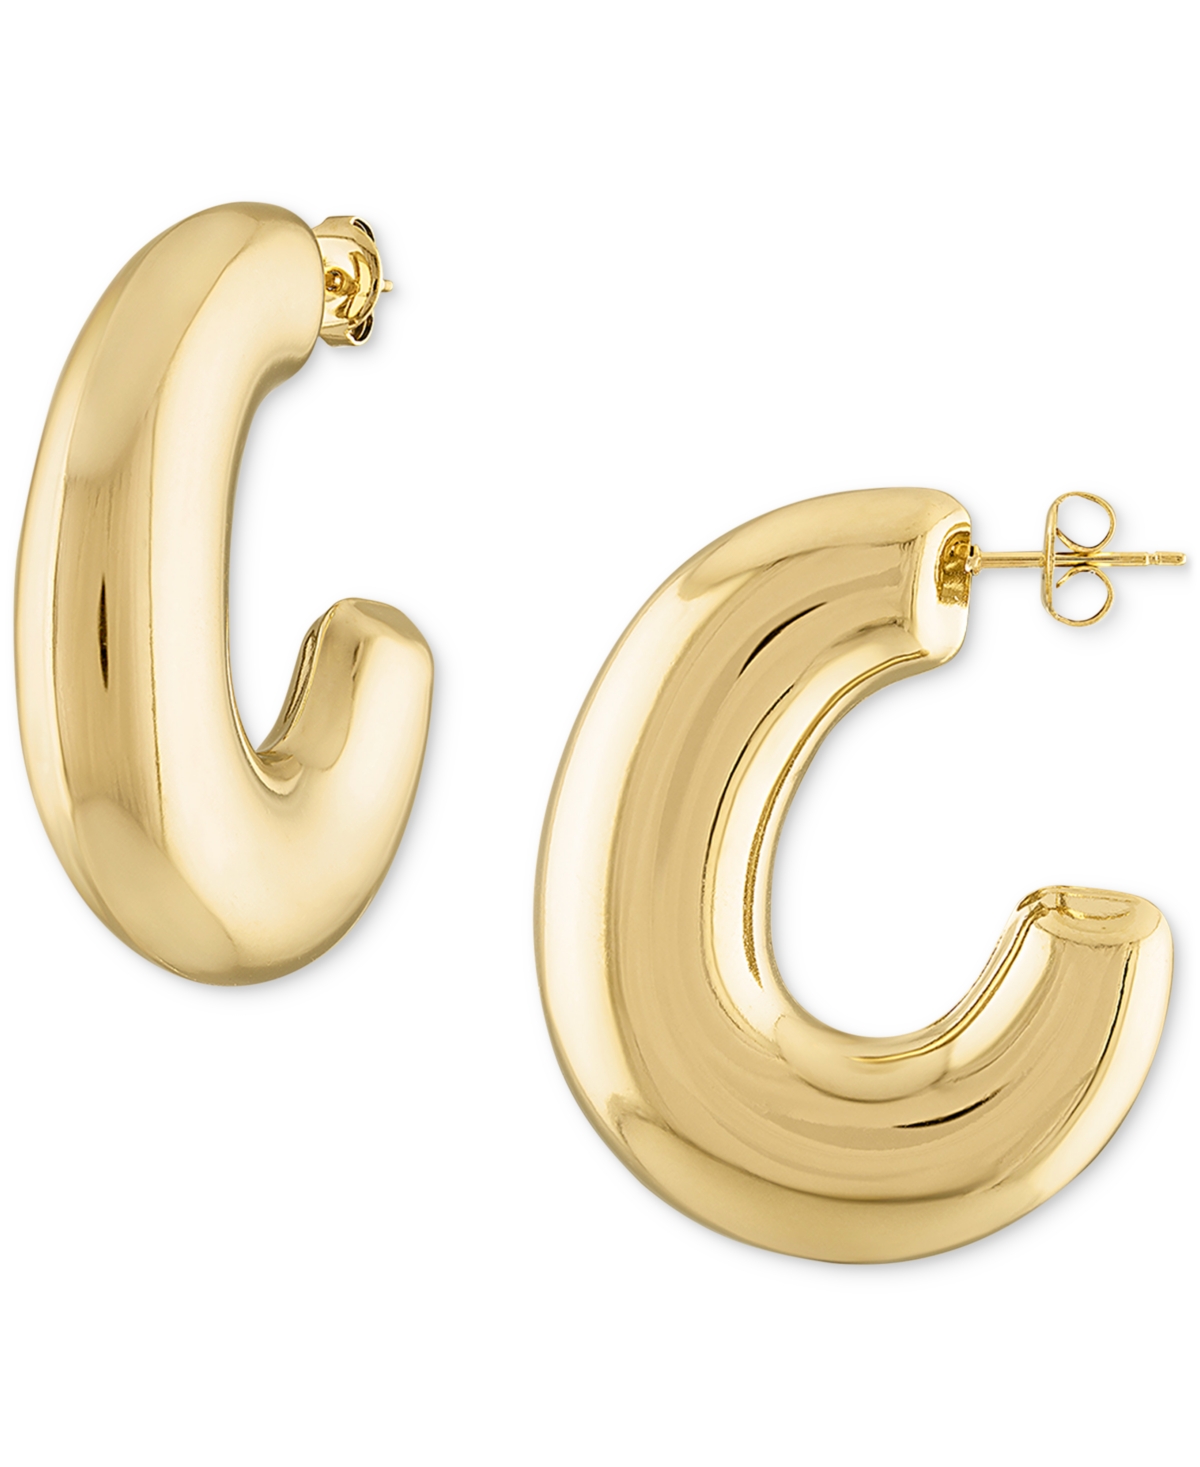 Chunky Anti-Tarnish Hoop Earrings - Gold Plated